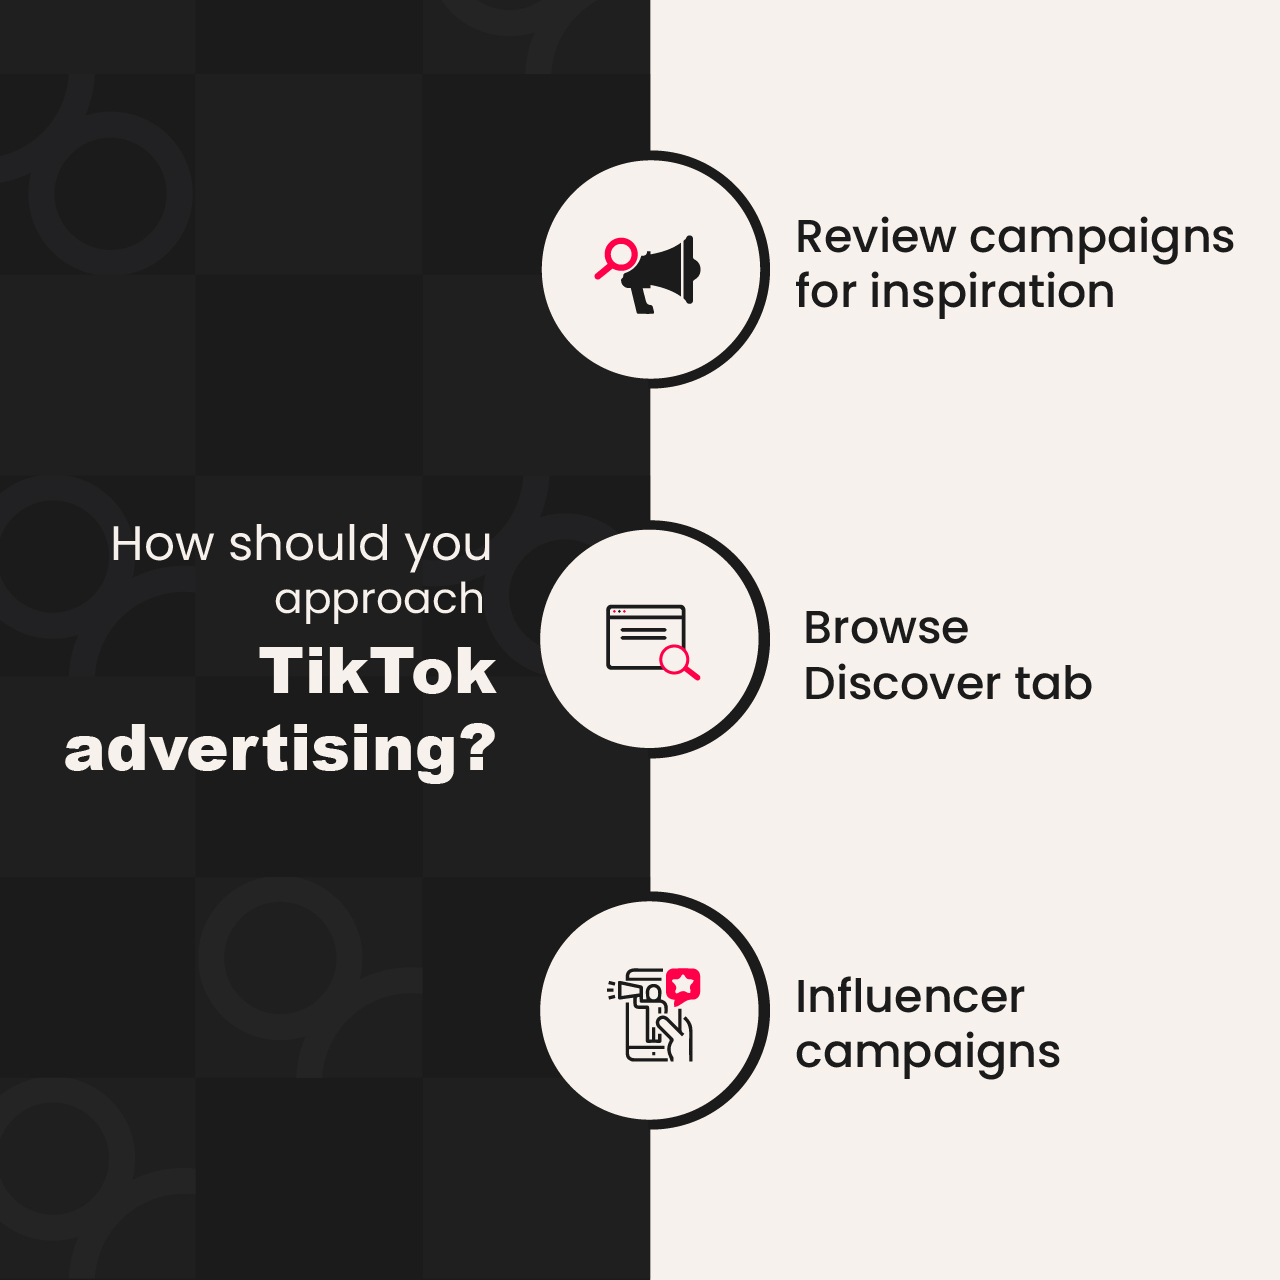 TikTok advertising best practices